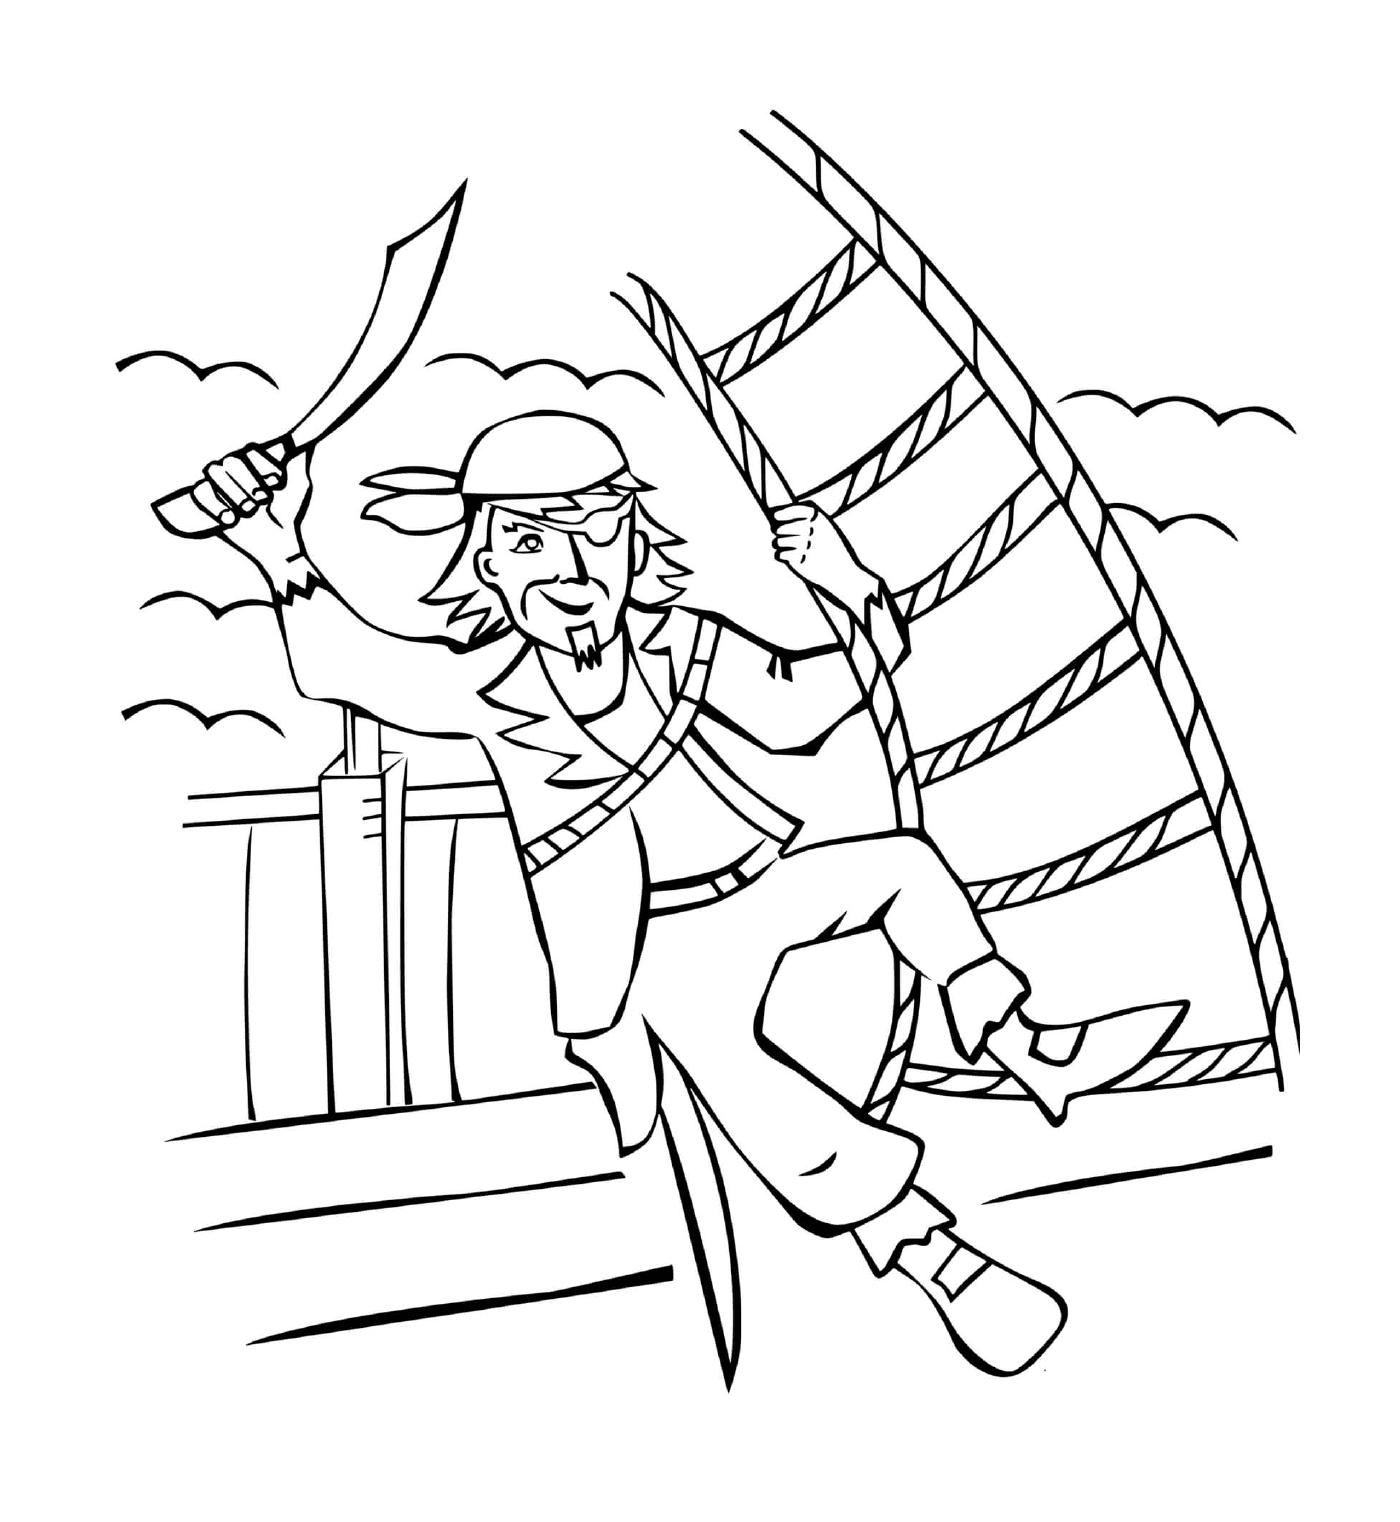  Pirate boy, adventure boat 